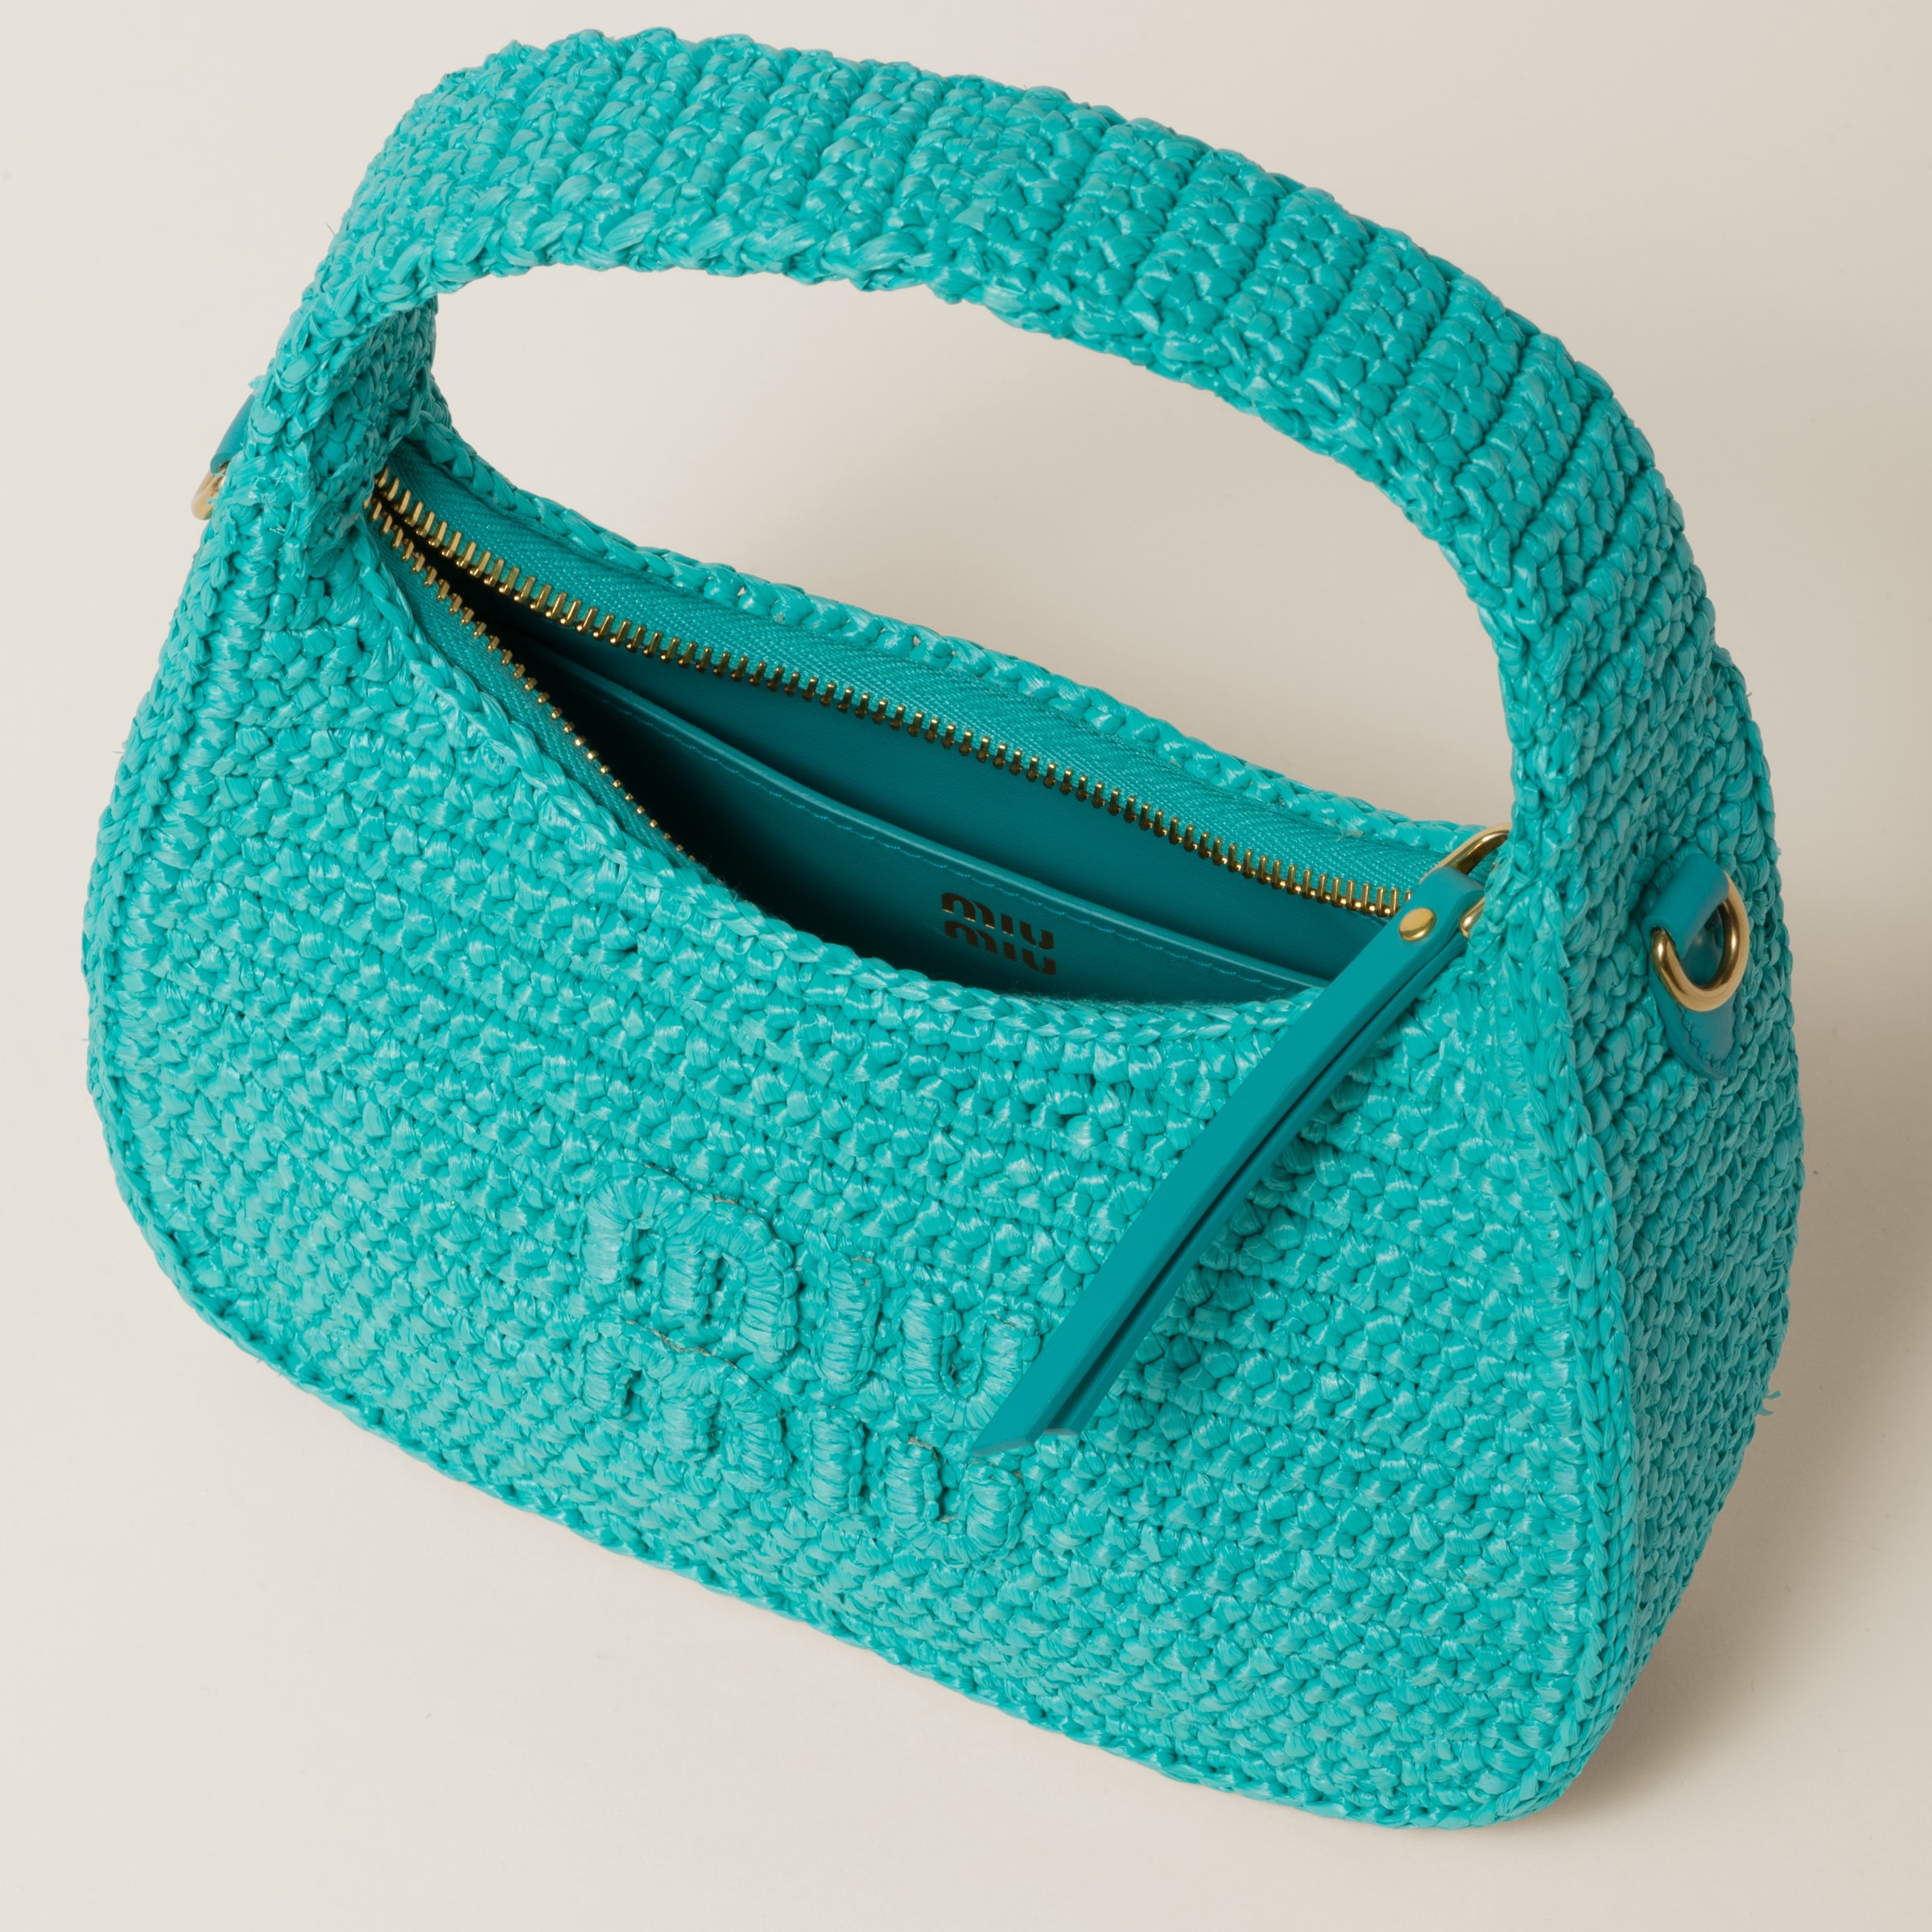 Wander crochet hobo bag - 5